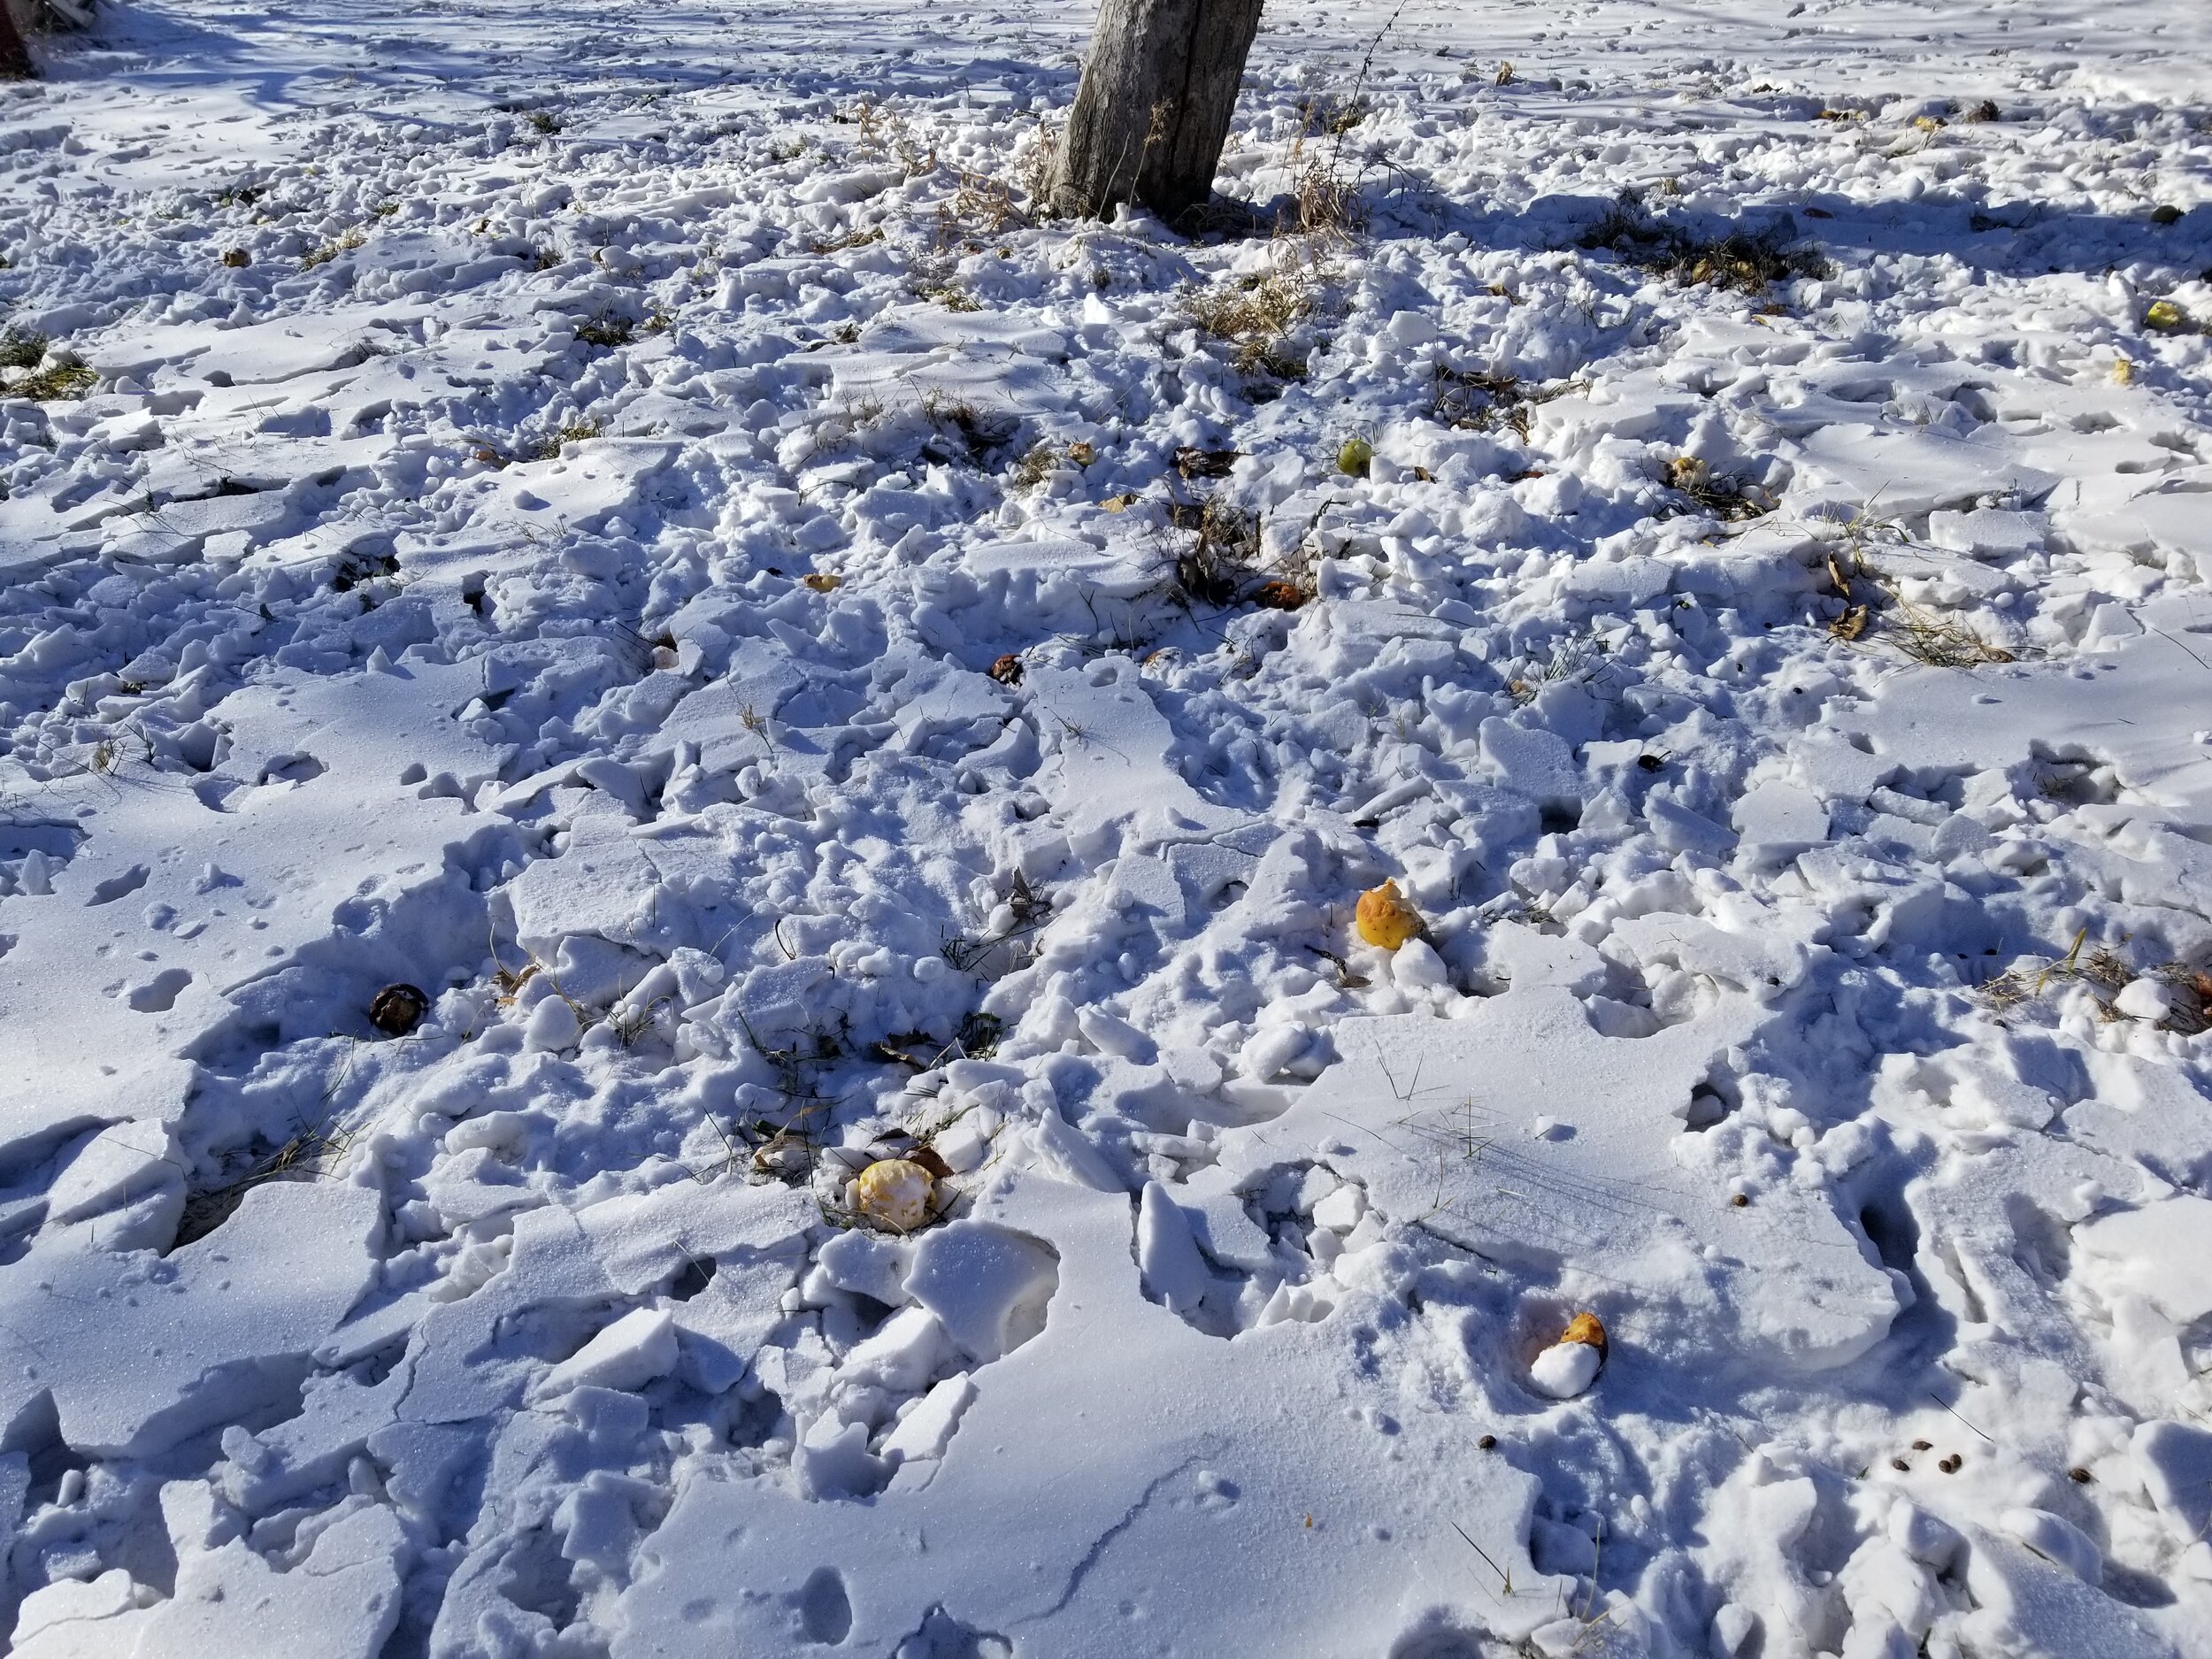 12.25.20 Fallen apples provide winter wildlife food